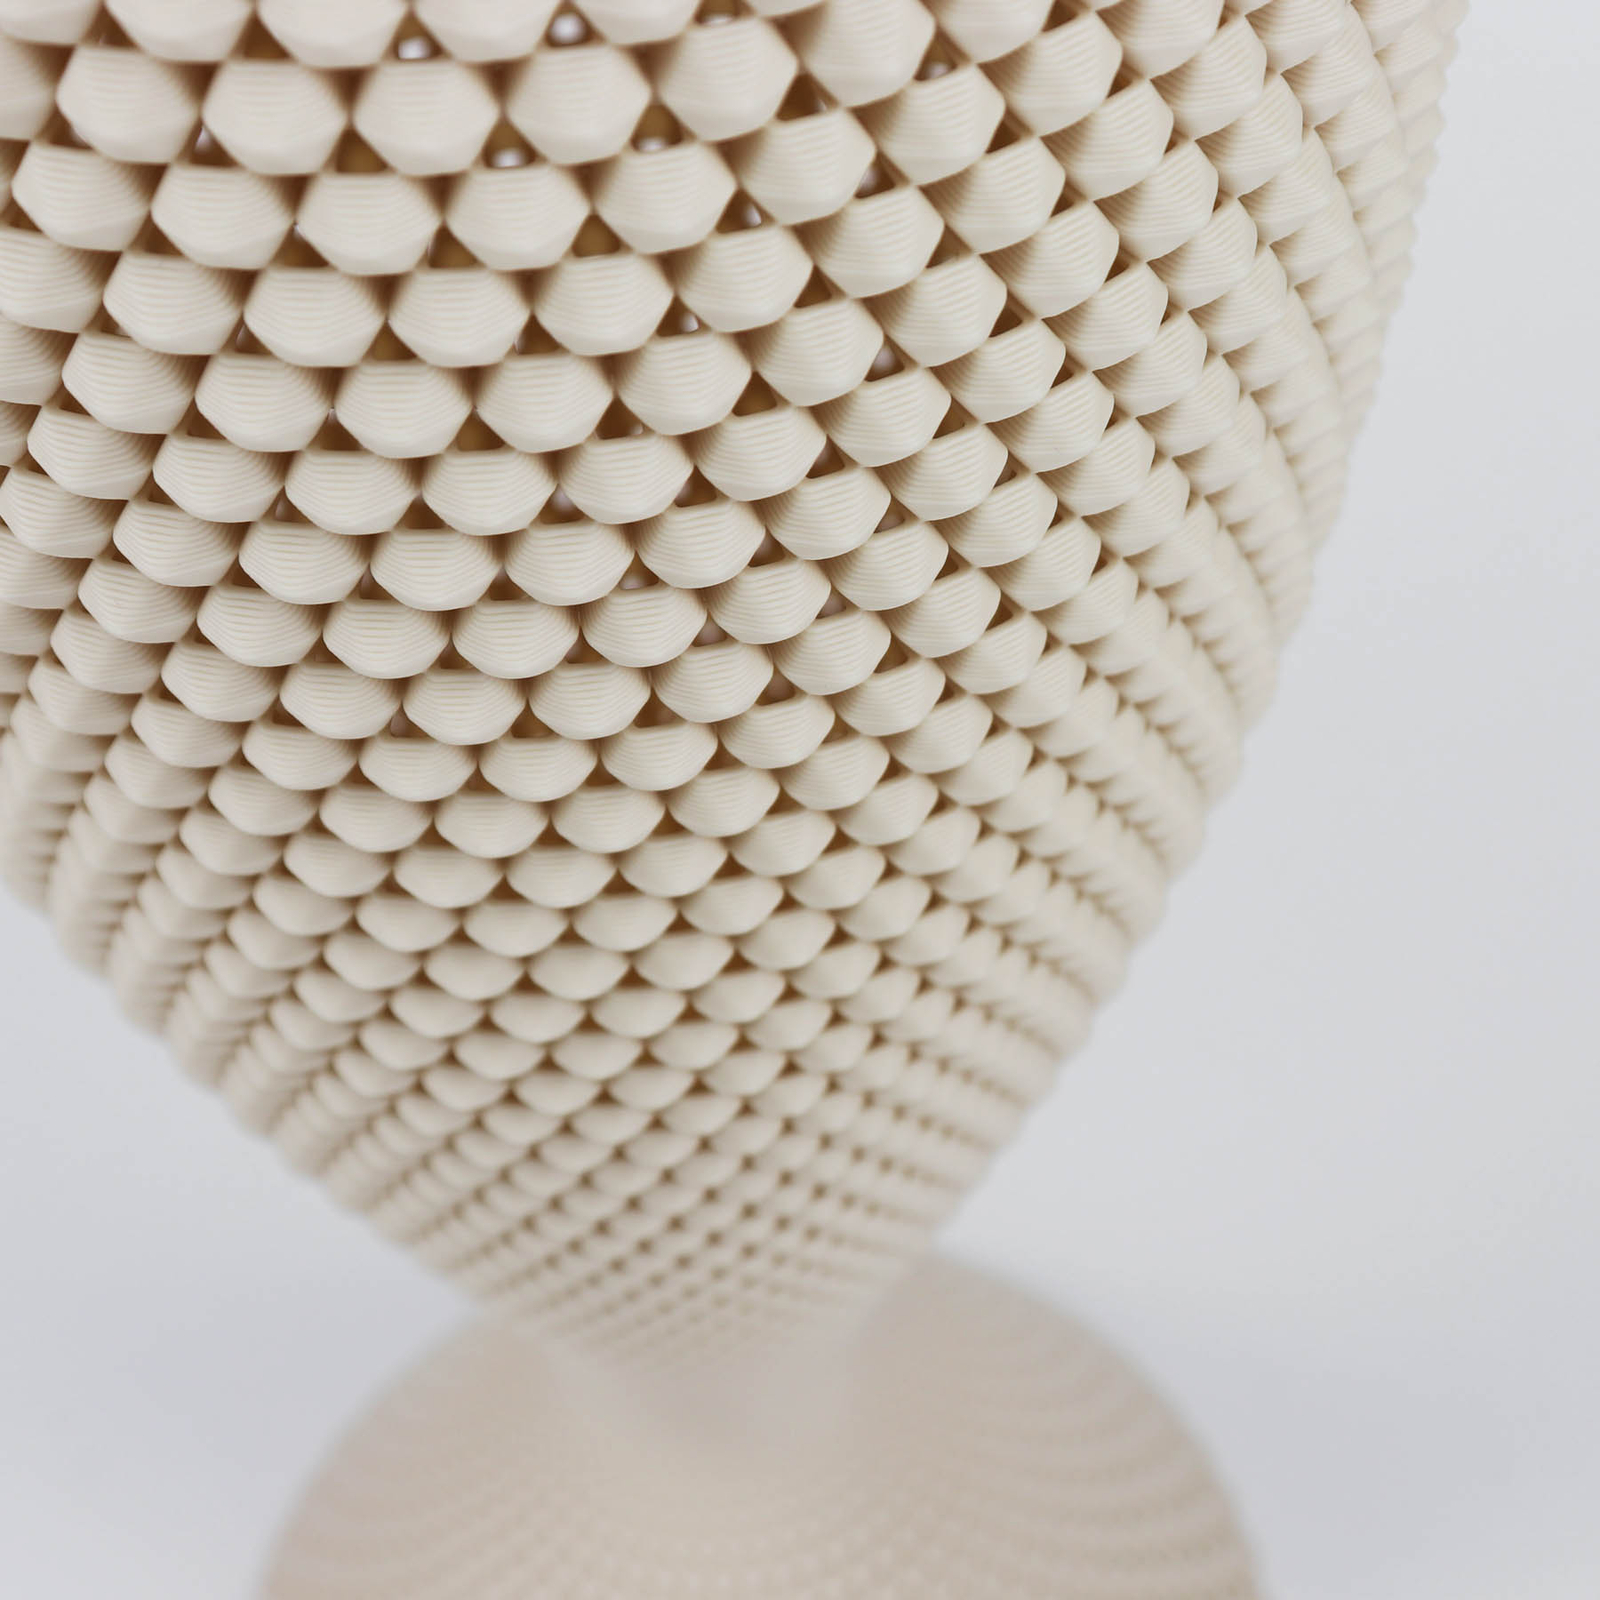 Diamantová stolová lampa z organického materiálu, ľan, 65 cm